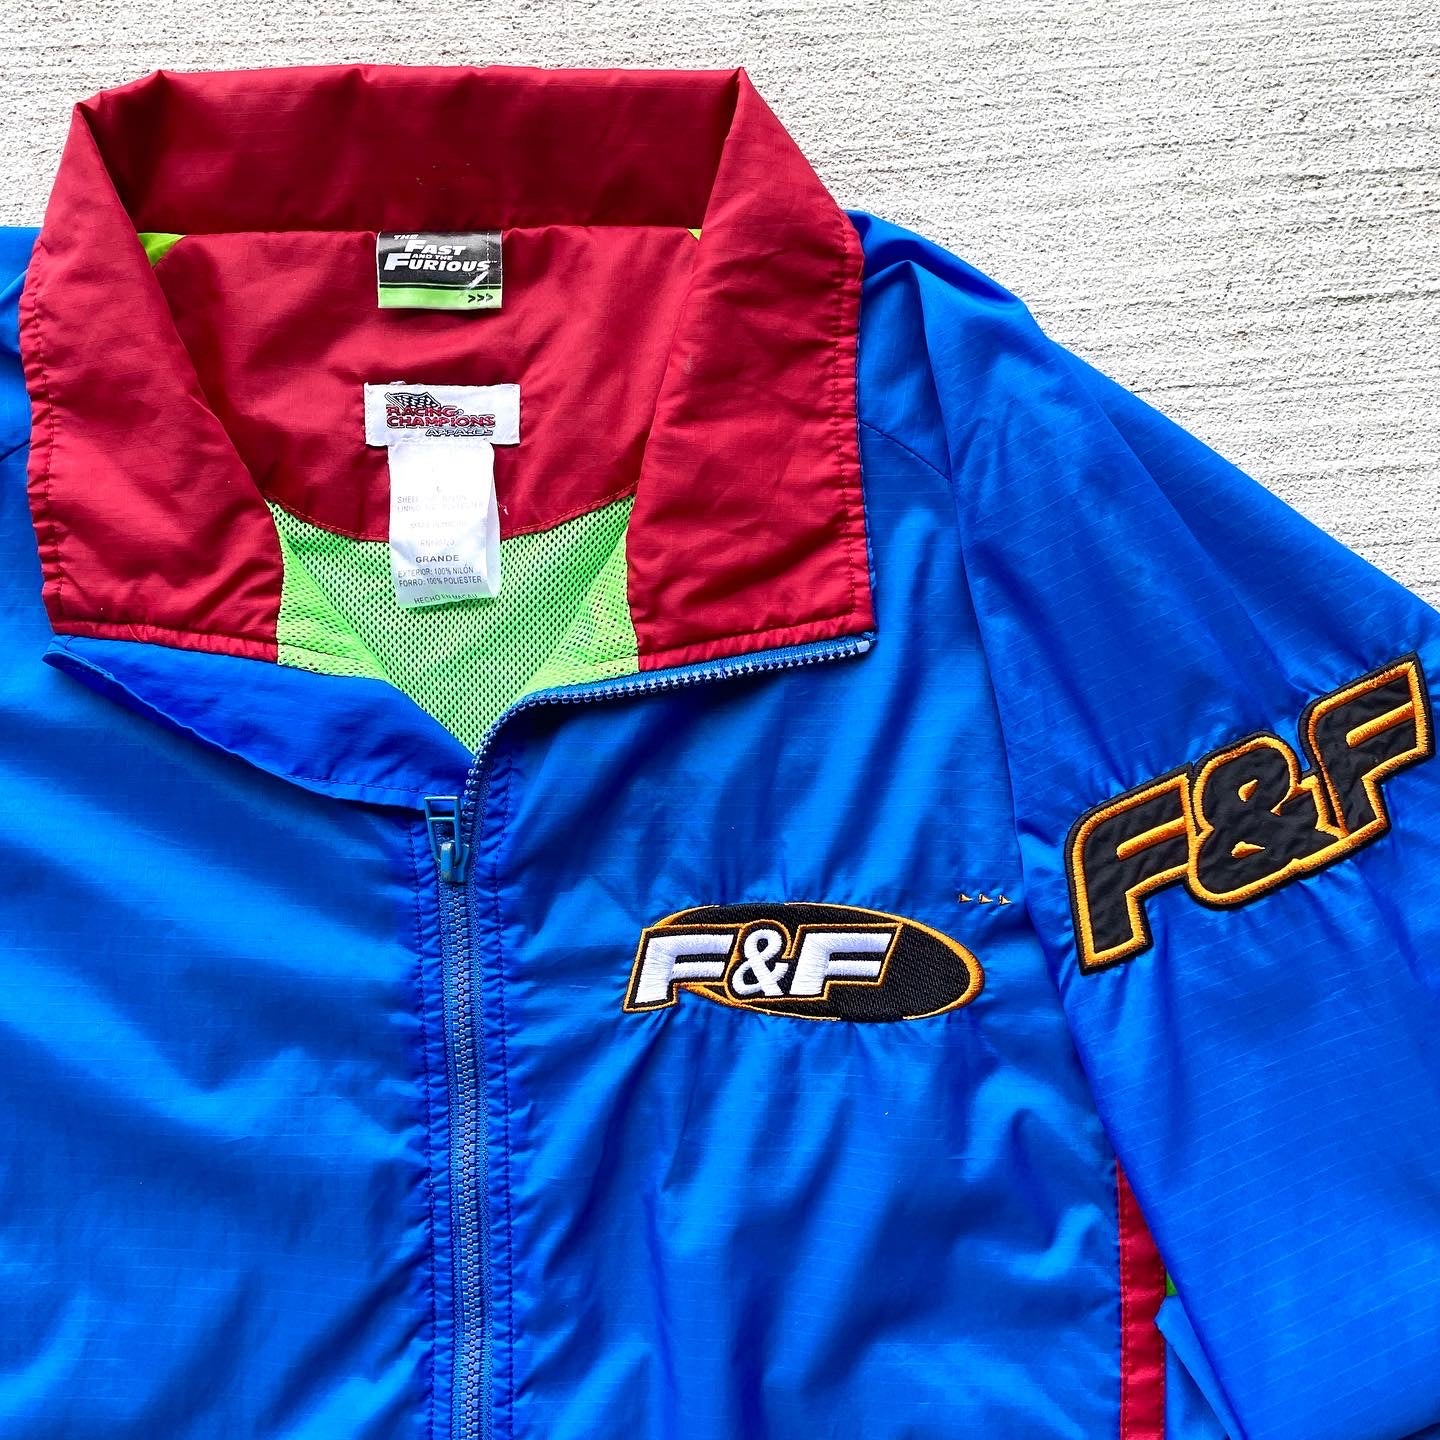 Vintage 'Fast & Furious' Promotion Jacket